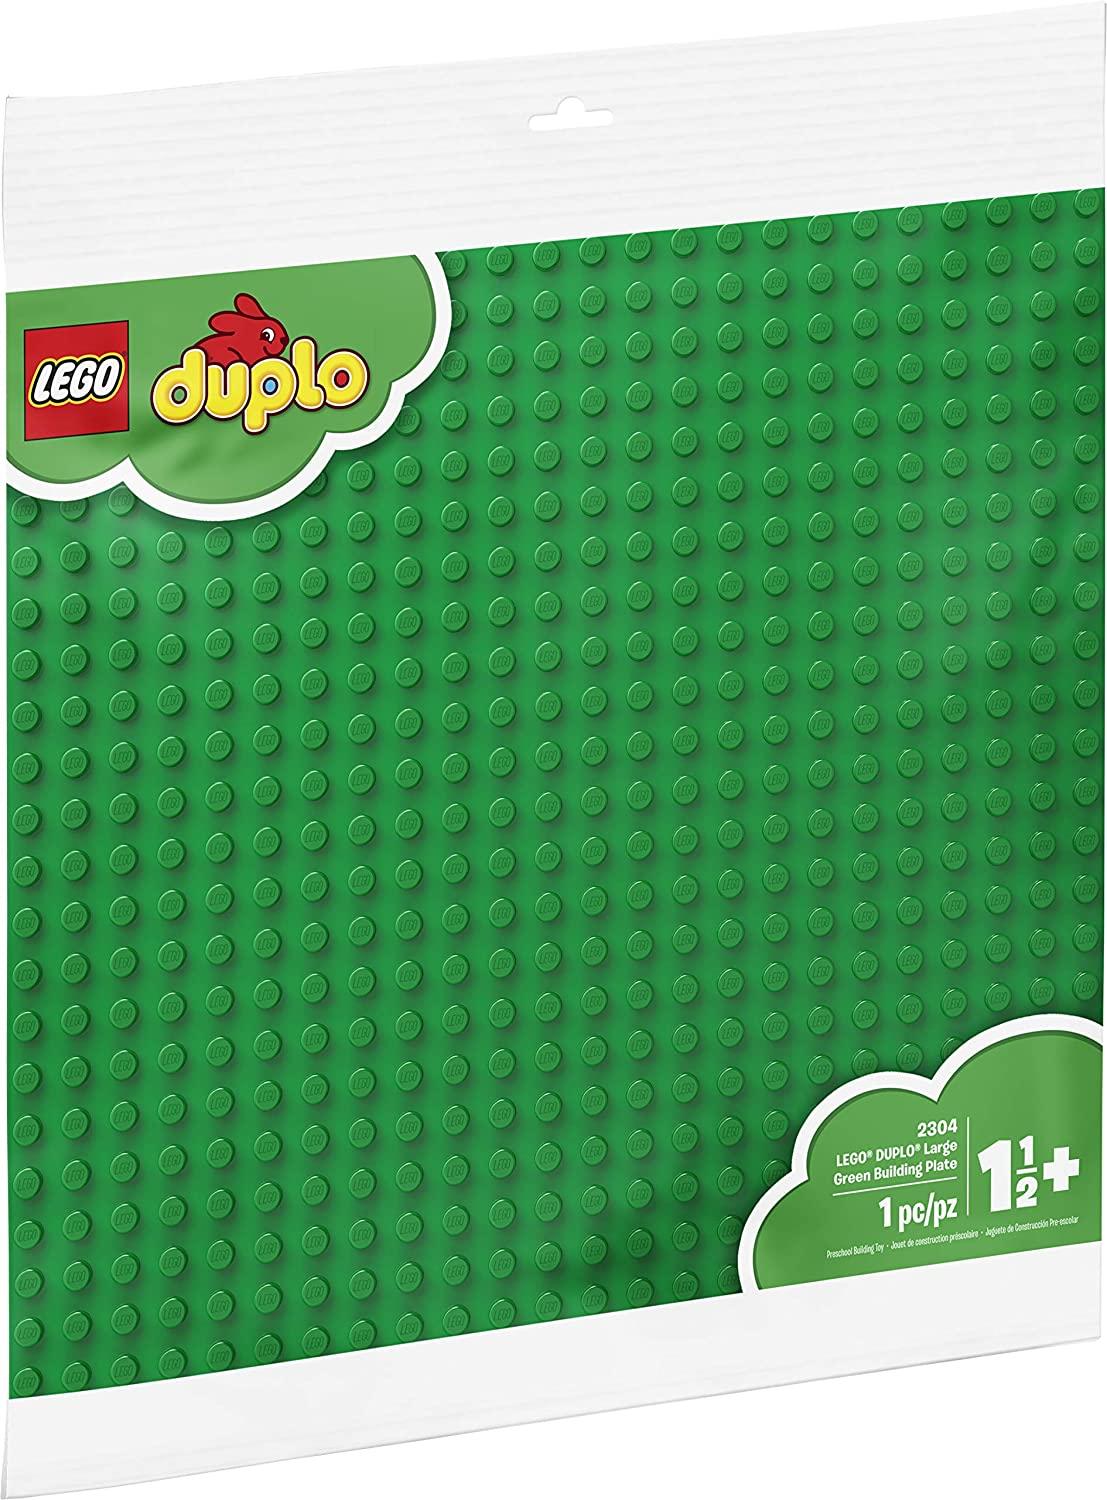 LEGO 2304 DUPLO Creative Play Lego Duplo Large Green Building Plate Toymaster Ballina